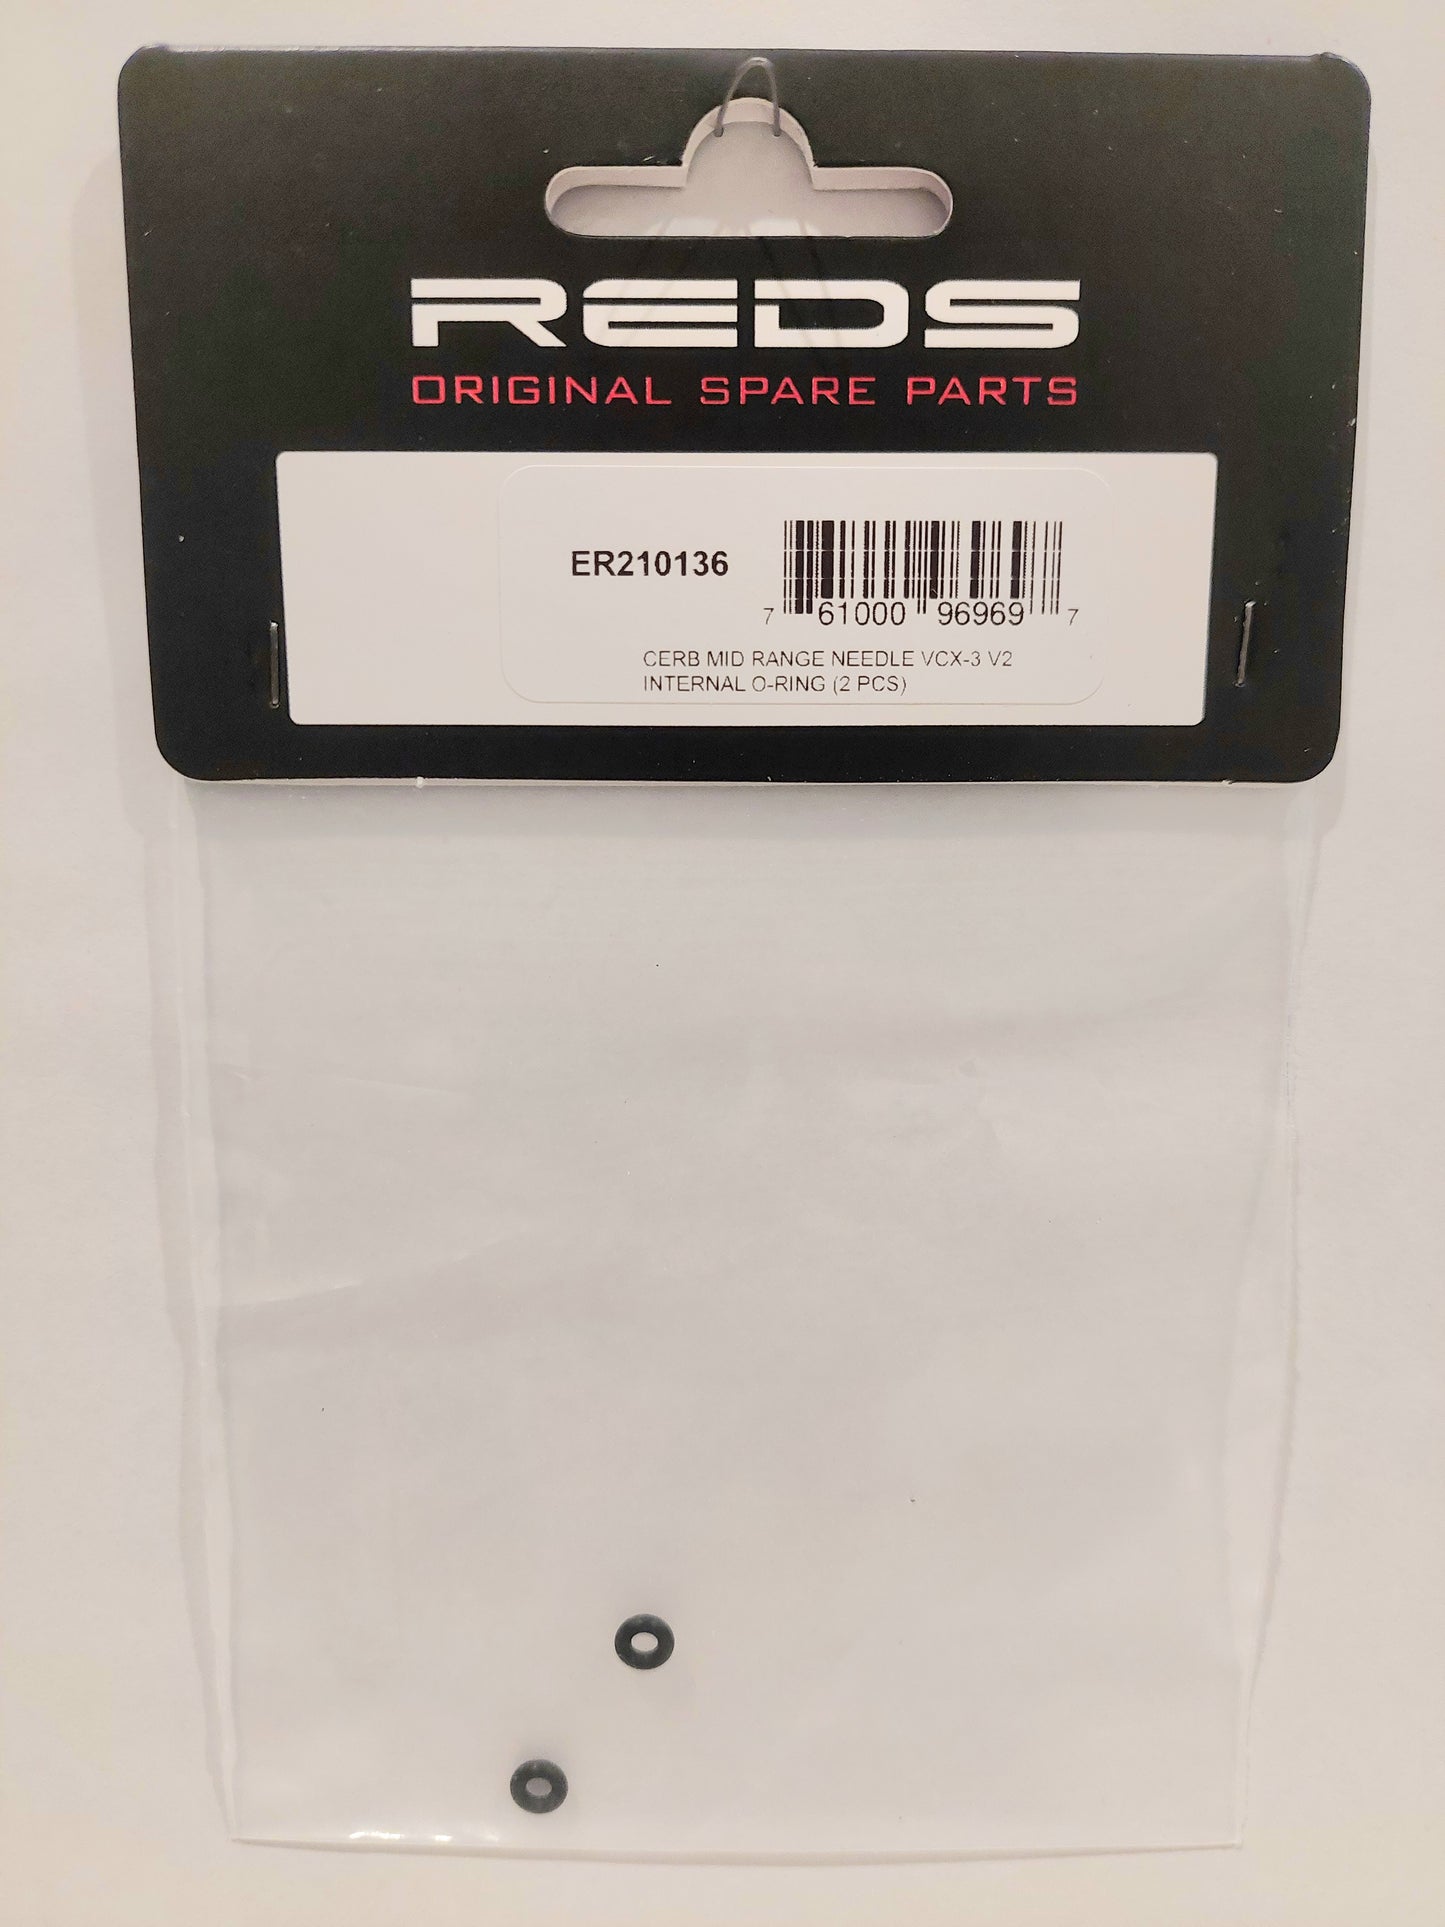 Parts- Reds Carb Mid Range Needle VCX-3 V2 Internal Oring (2Pcs)